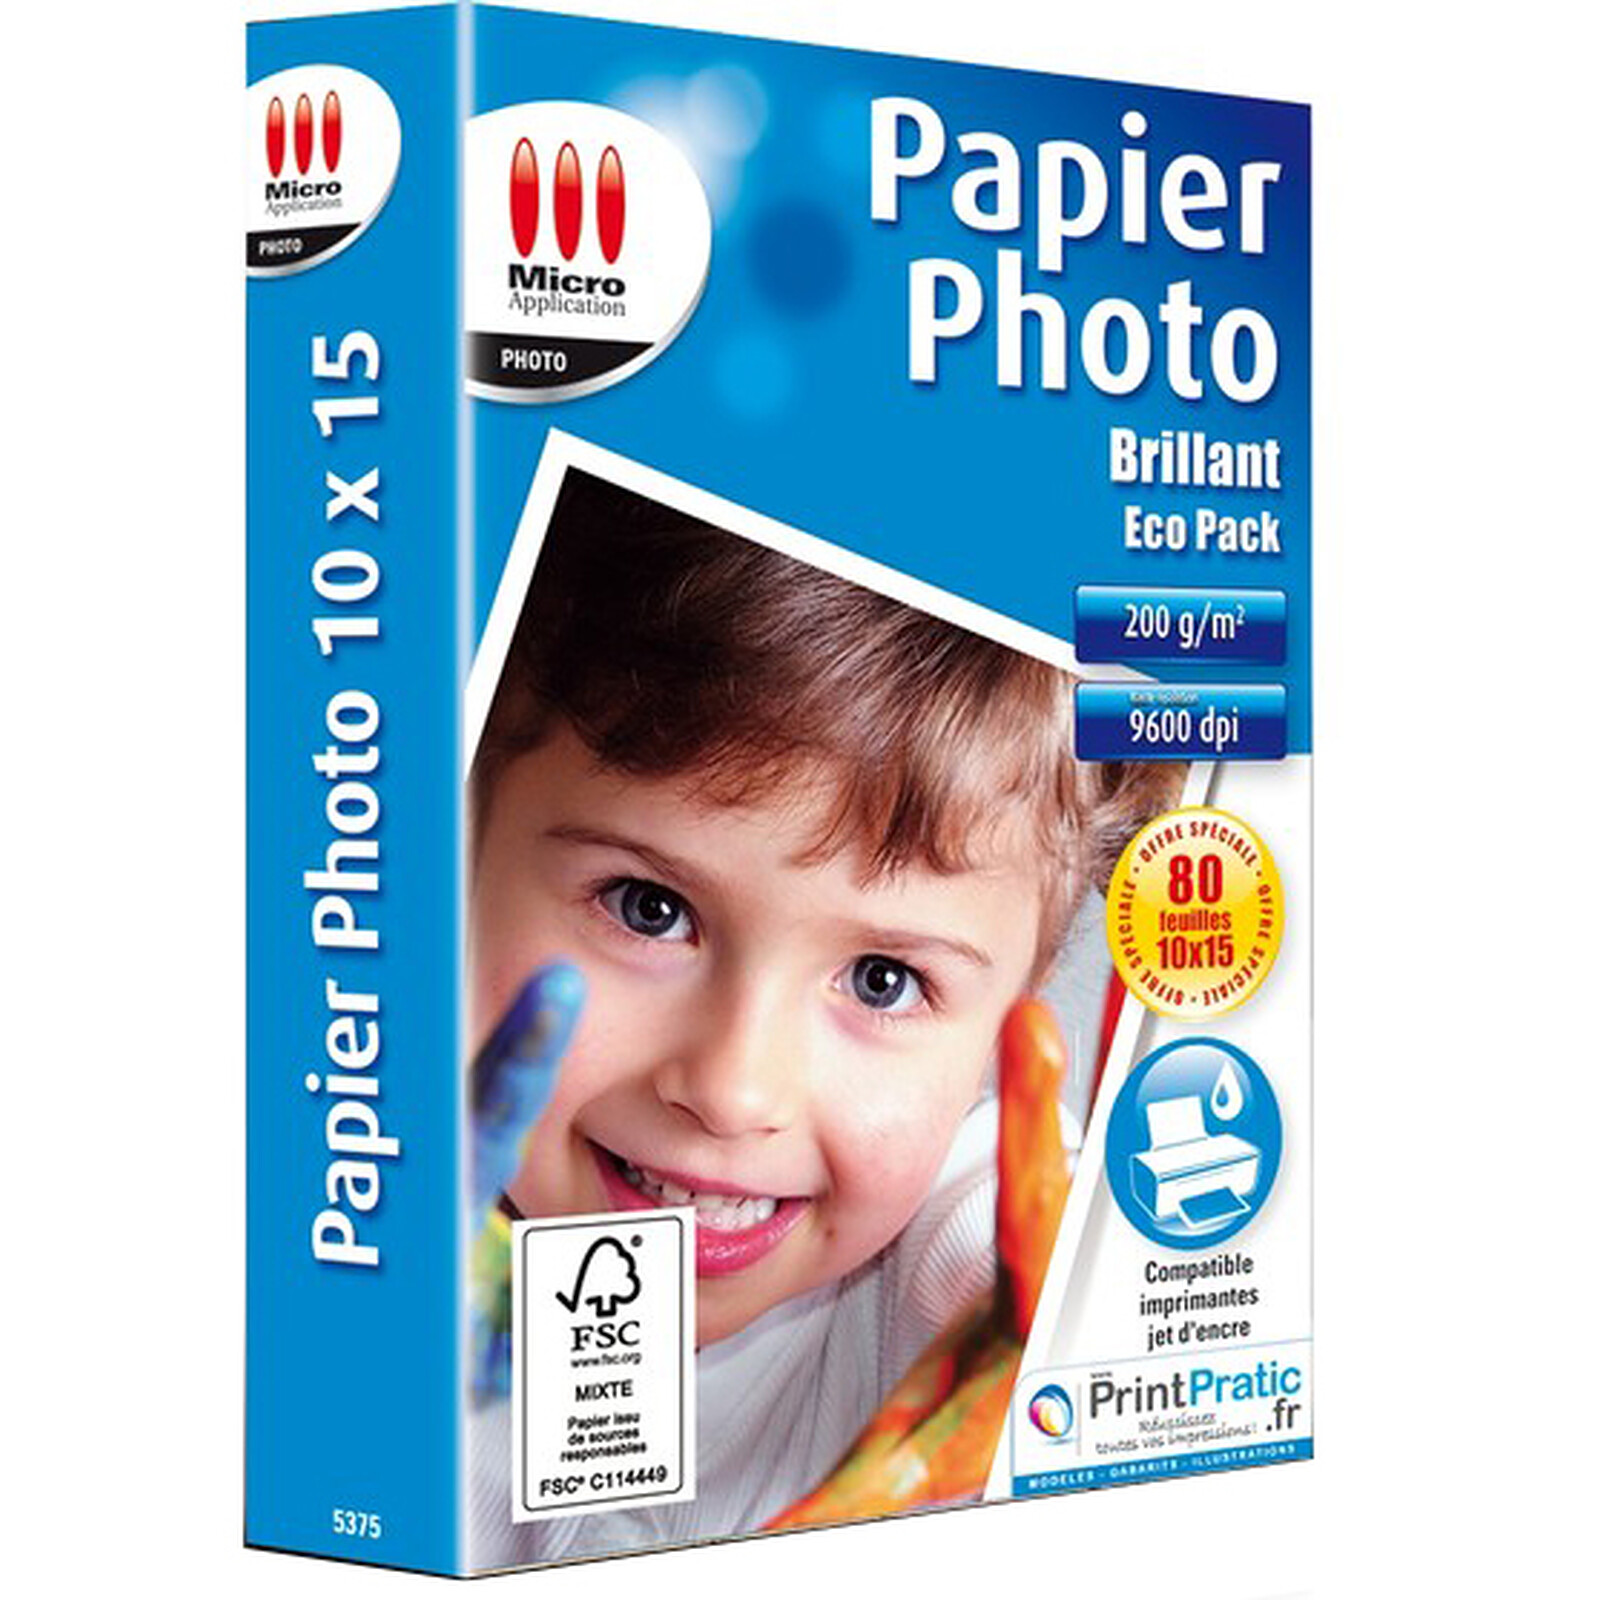 Micro Application Papier photo Photo Maxi Pack A4 Brillant 170g/m2